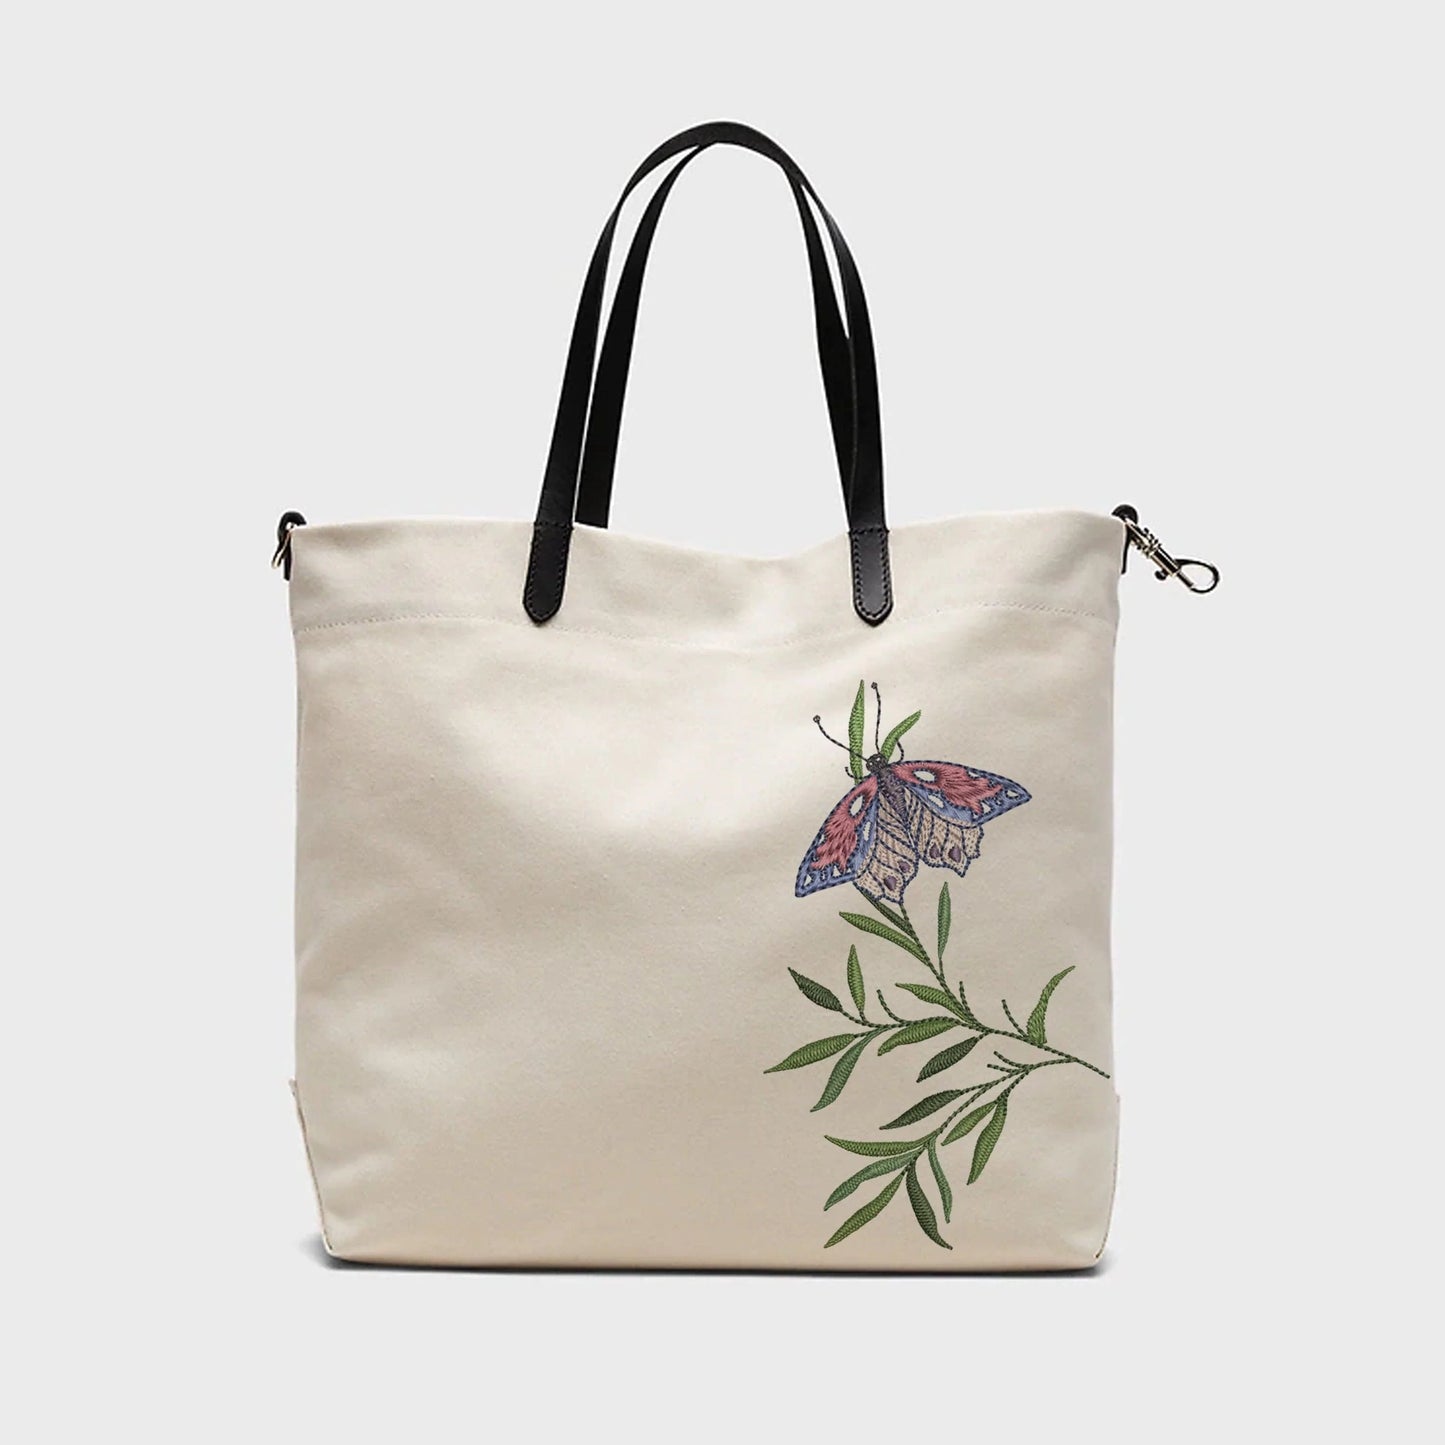 Flower Butterfly Machine Embroidery Design on canvas handbag